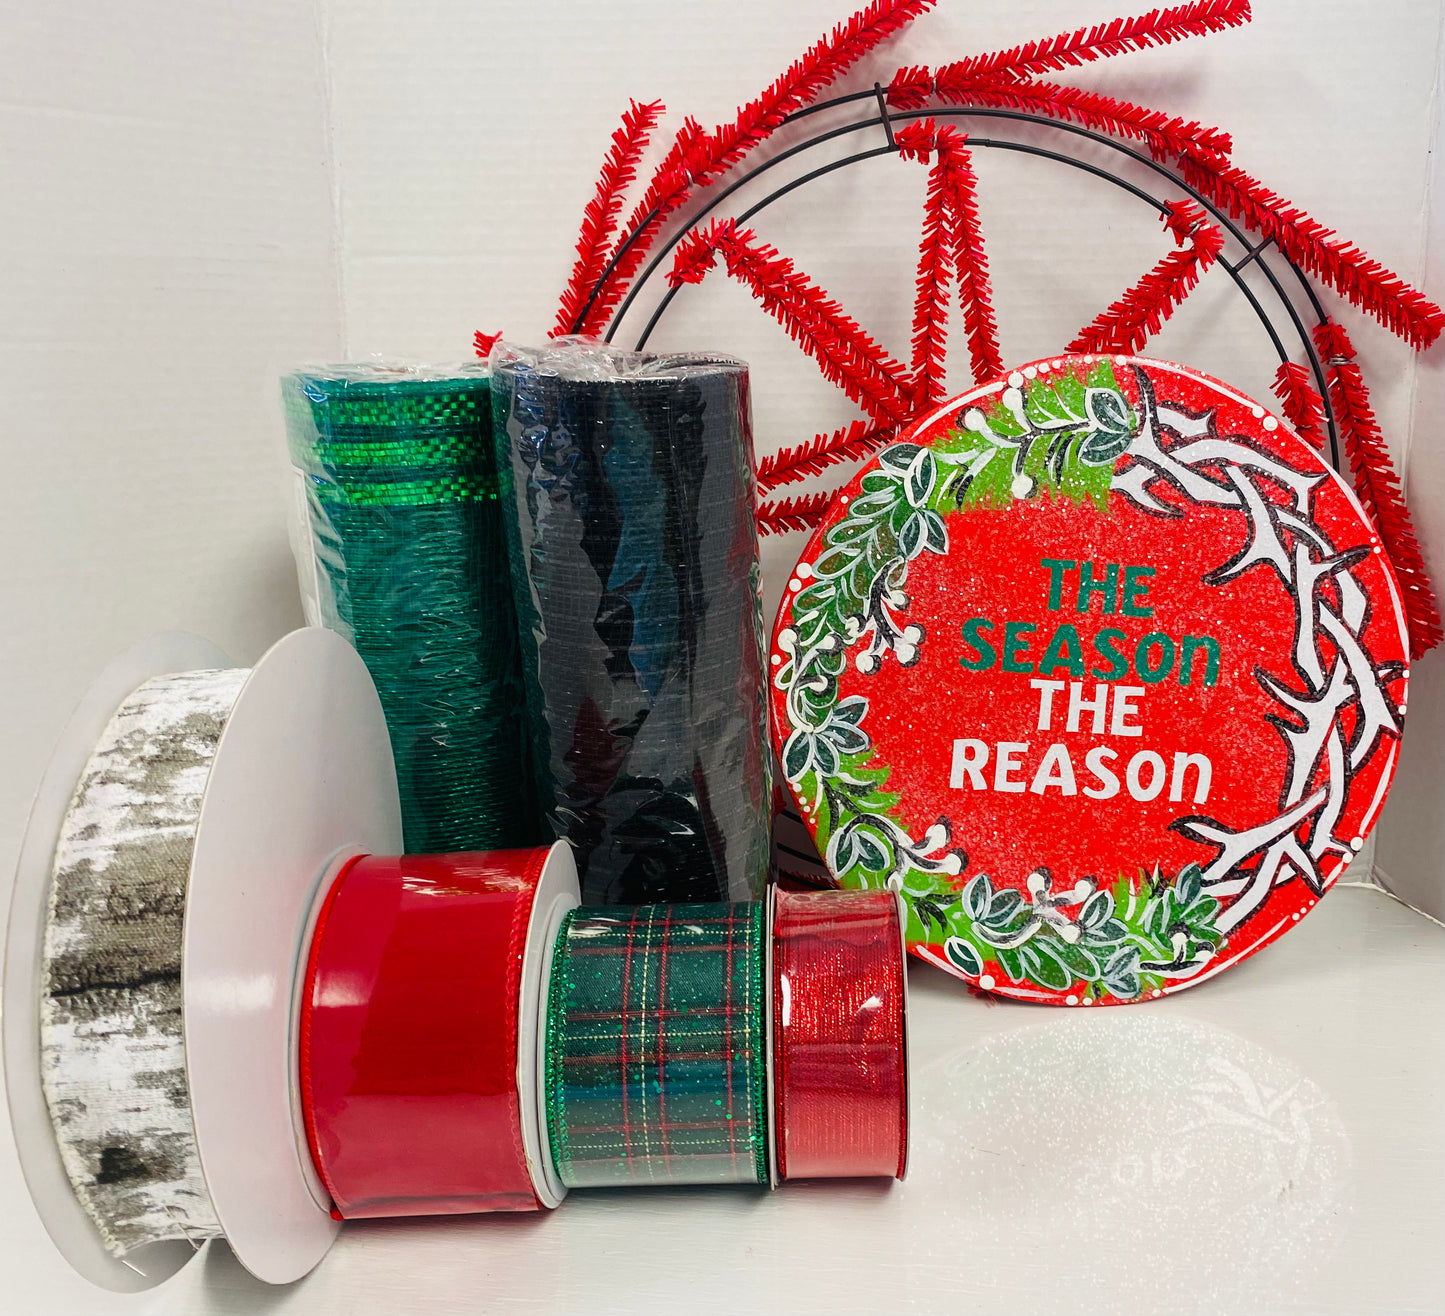 The Season The Reason Christmas DIY Wreath Kit